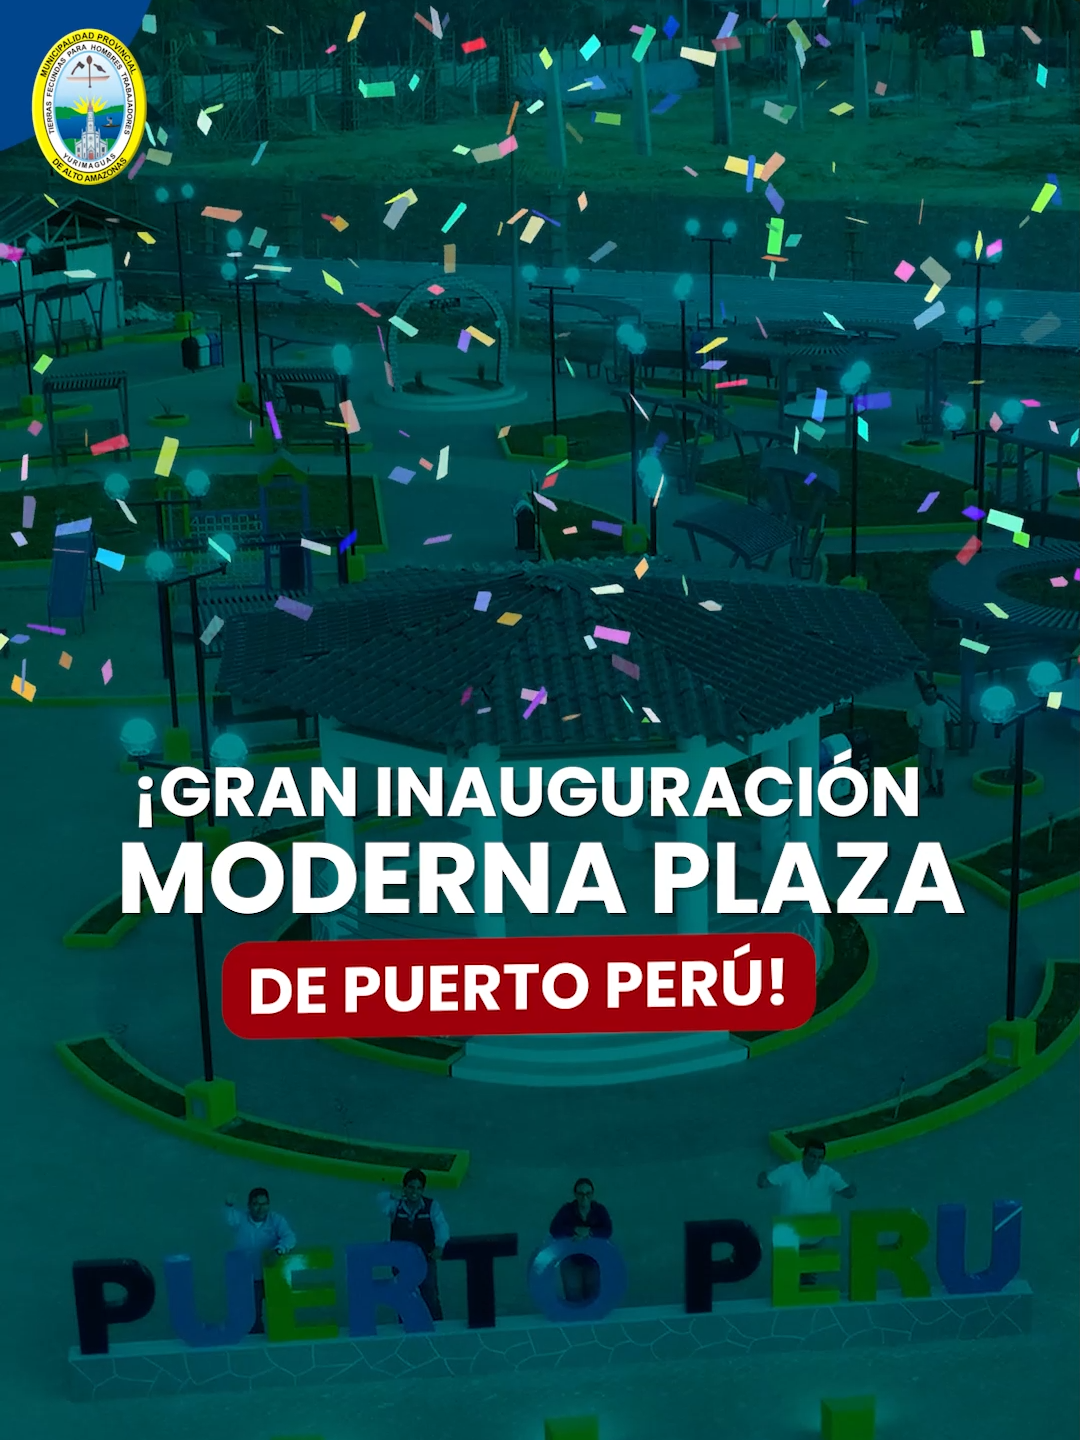 ✅ ¡Gran inauguración! Moderna plaza de Puerto Perú ⛲ #Inauguración #RoySaldaña #Yurimaguas